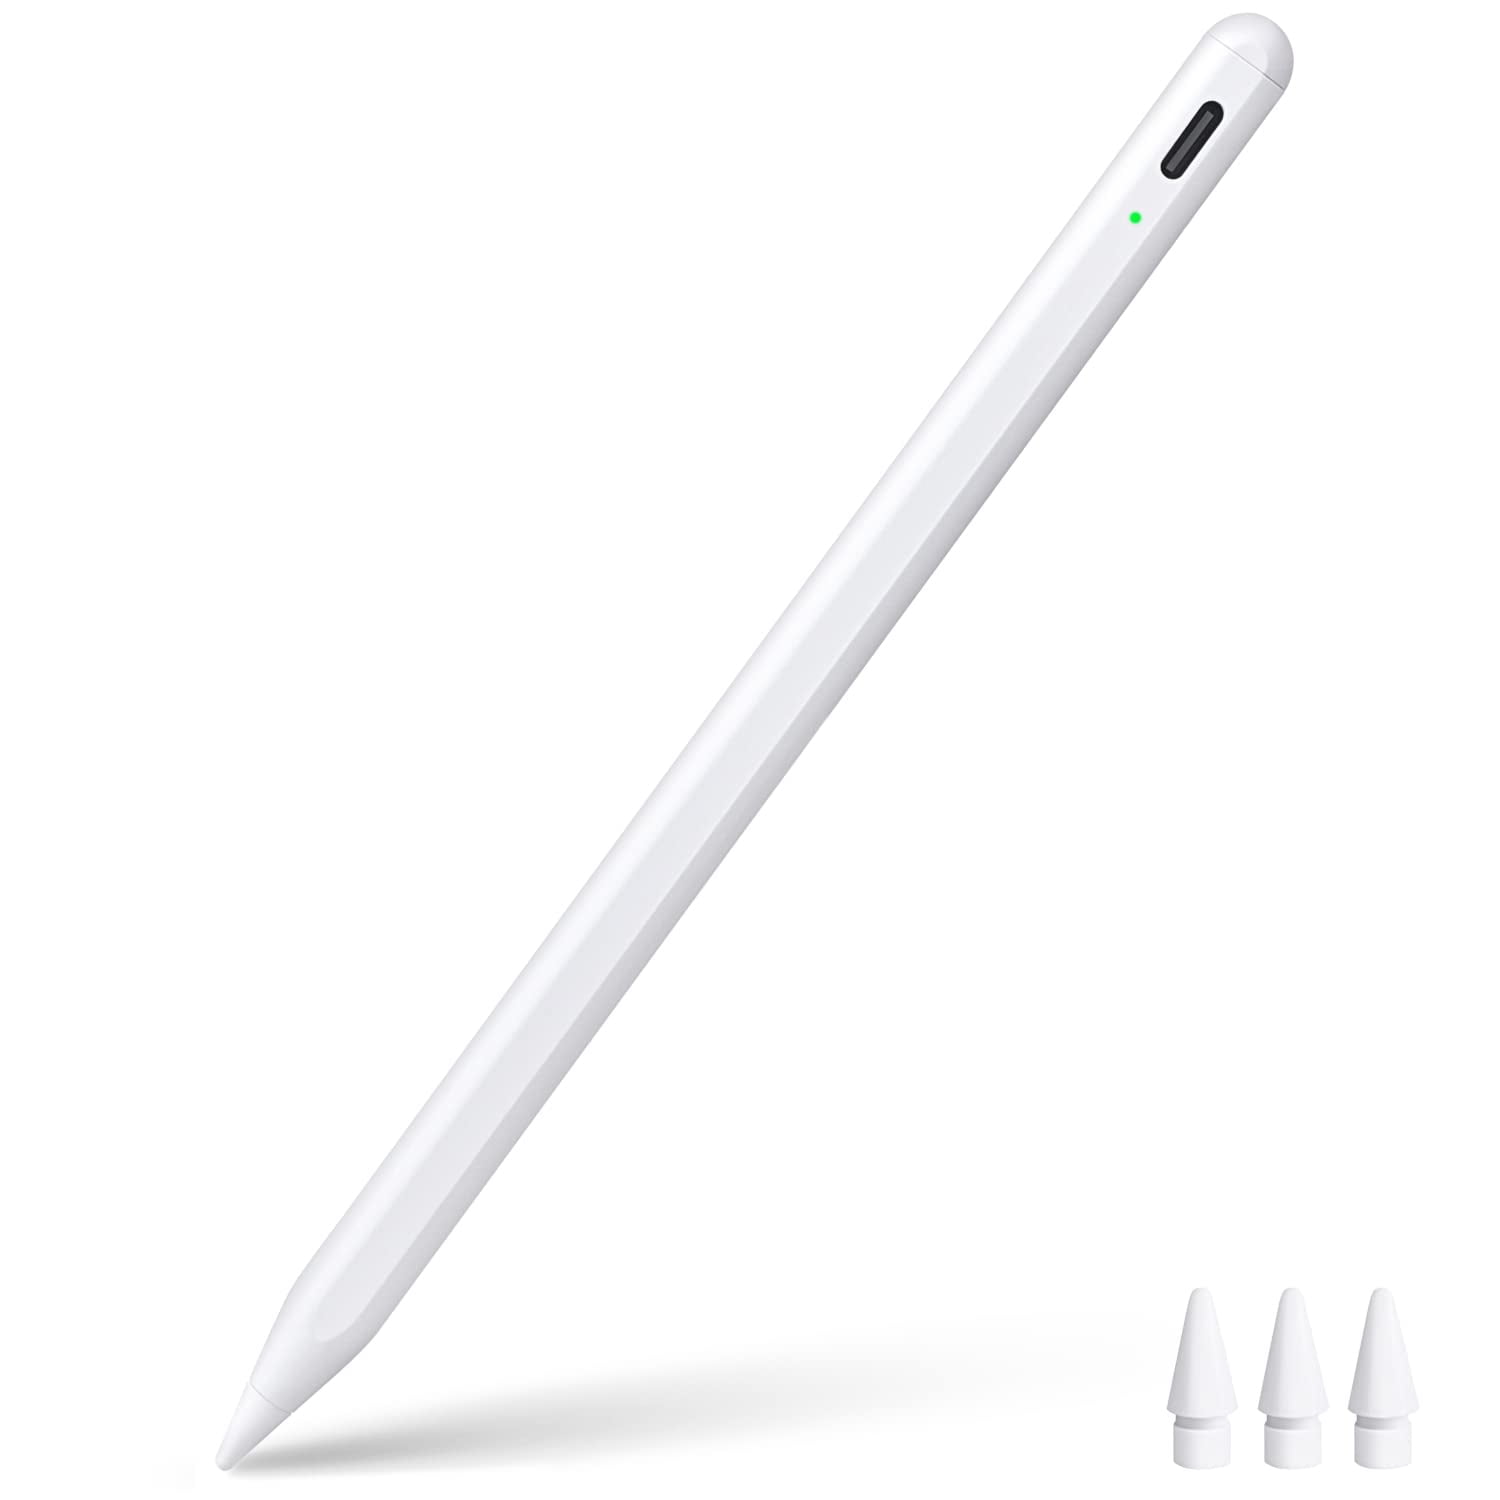  iPad Pencil 2nd Generation with Magnetic Wireless Charging,  Apple Pencil 2nd Generation, Smart Pen Compatible with iPad Pro 11 in  1/2/3/4, iPad Pro 12.9 in 3/4/5/6, iPad Air 4/5, iPad Mini